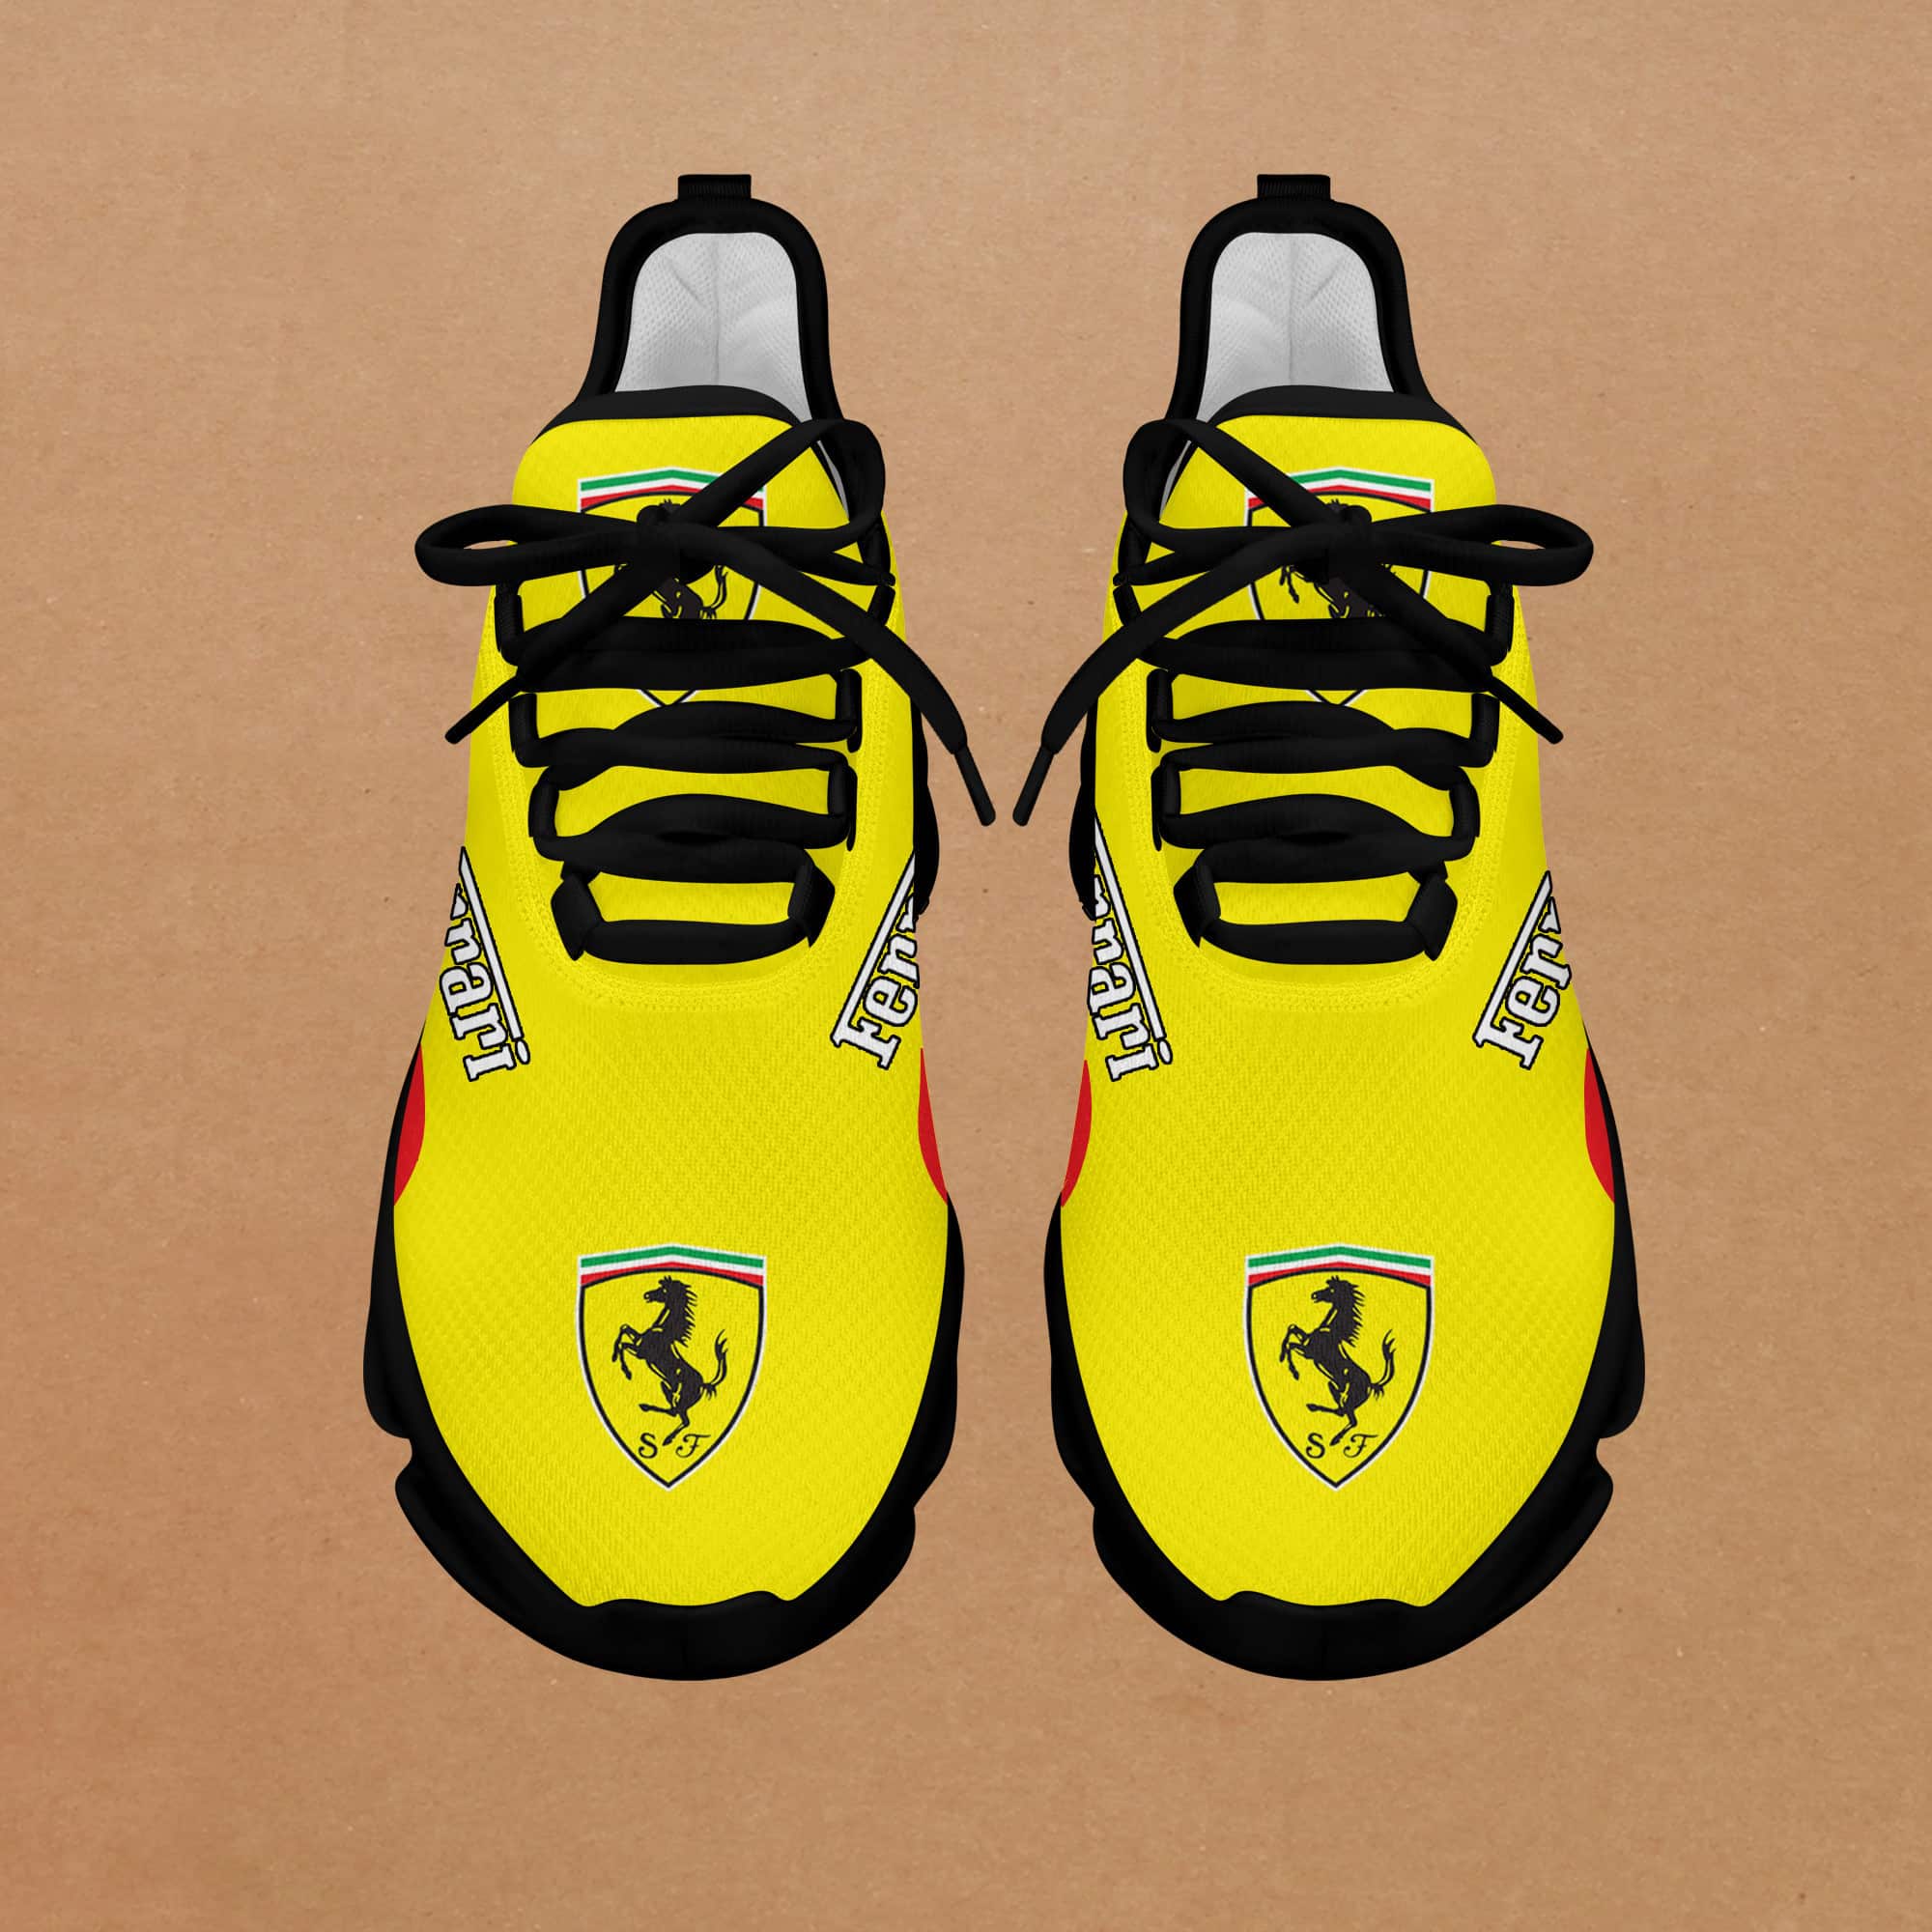 Ferrari Sneaker Running Shoes Max Soul Shoes Sneakers Ver 5 4